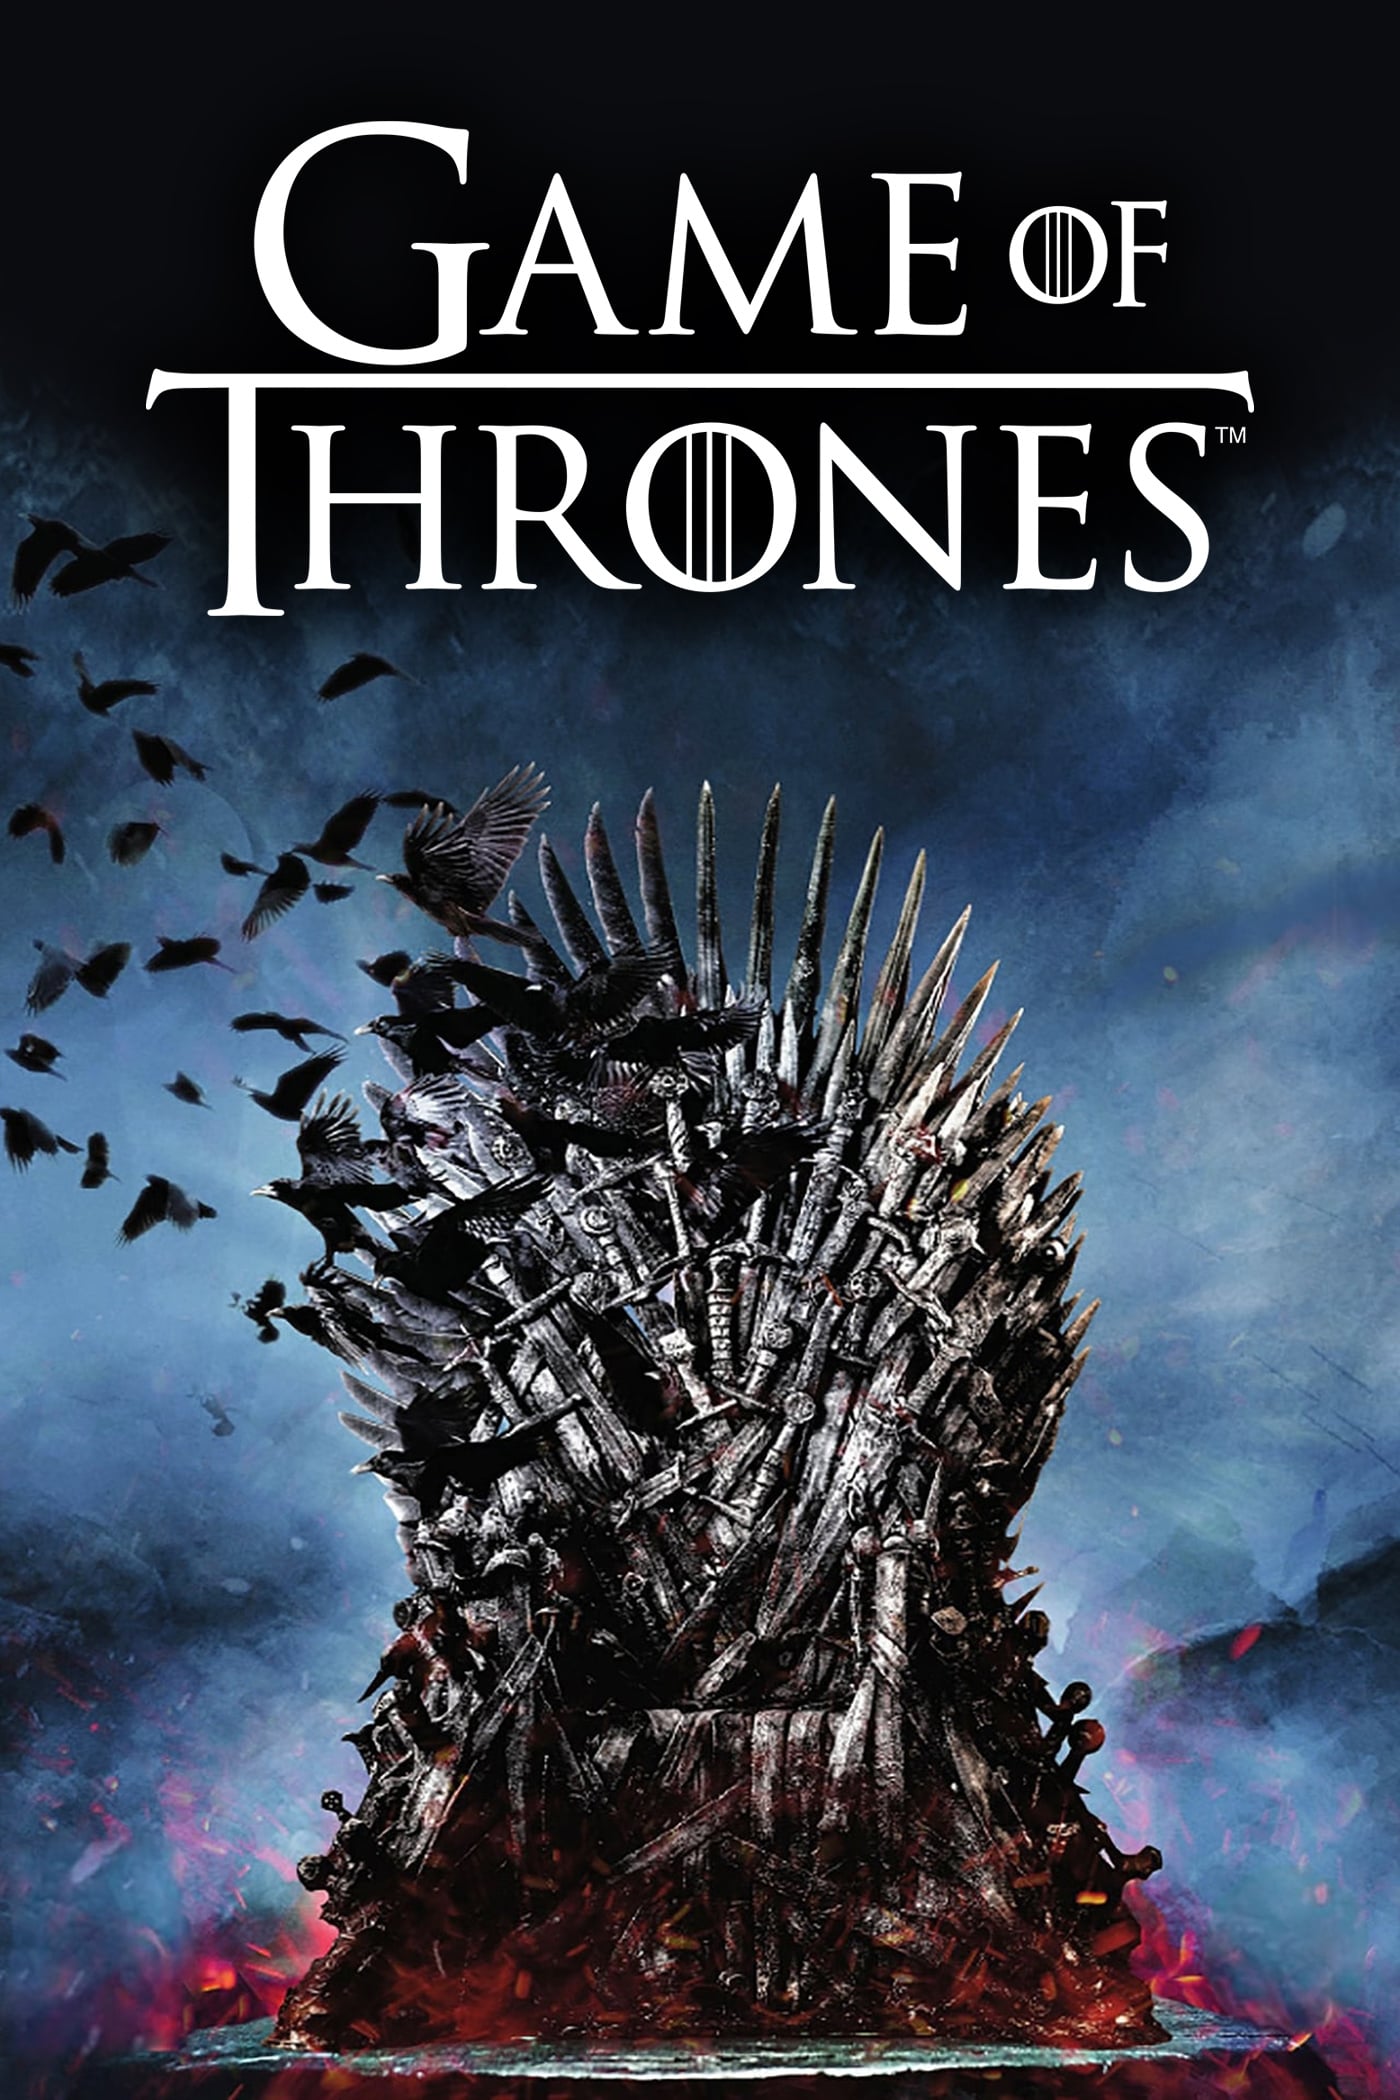 Game of Thrones - Season 2 มหาศึกชิงบัลลังก์ (2012) (English DTS 5.1-Thai 2.0) (Text: English-Thai) (UsersCloud)